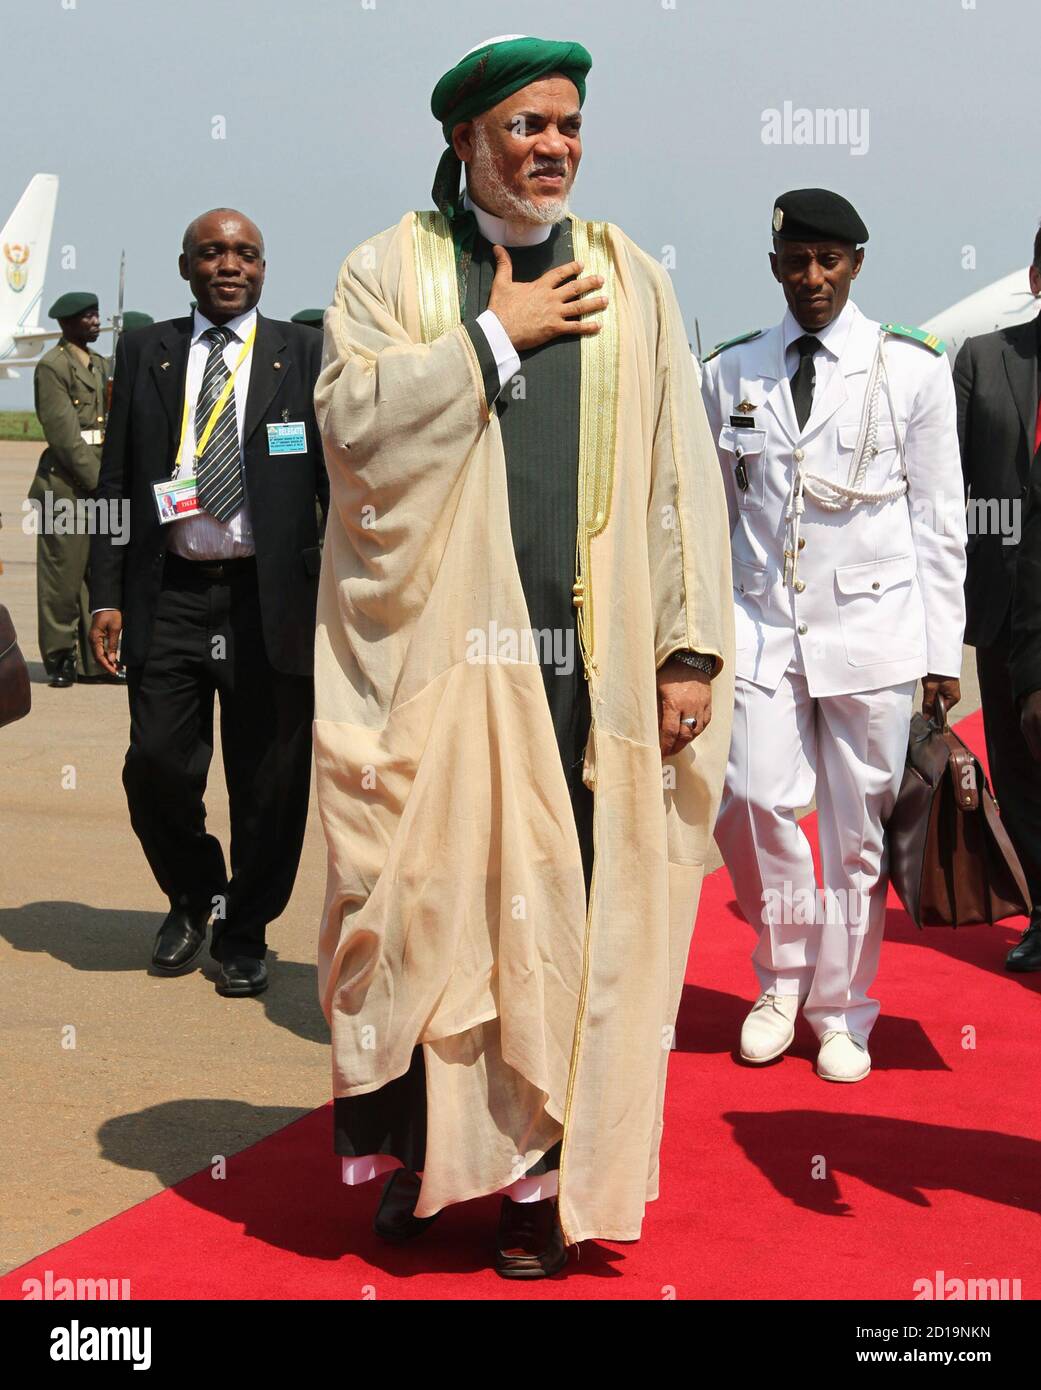 Comoros President Abdullah Muhamed Sambi (C) arrives at the airport in Entebbe 42km (26 miles) south of Uganda's capital Kampala, July 24, 2010. Sambi is in Uganda to attend the African Union summit.  REUTERS/James Akena (UGANDA) Stock Photo